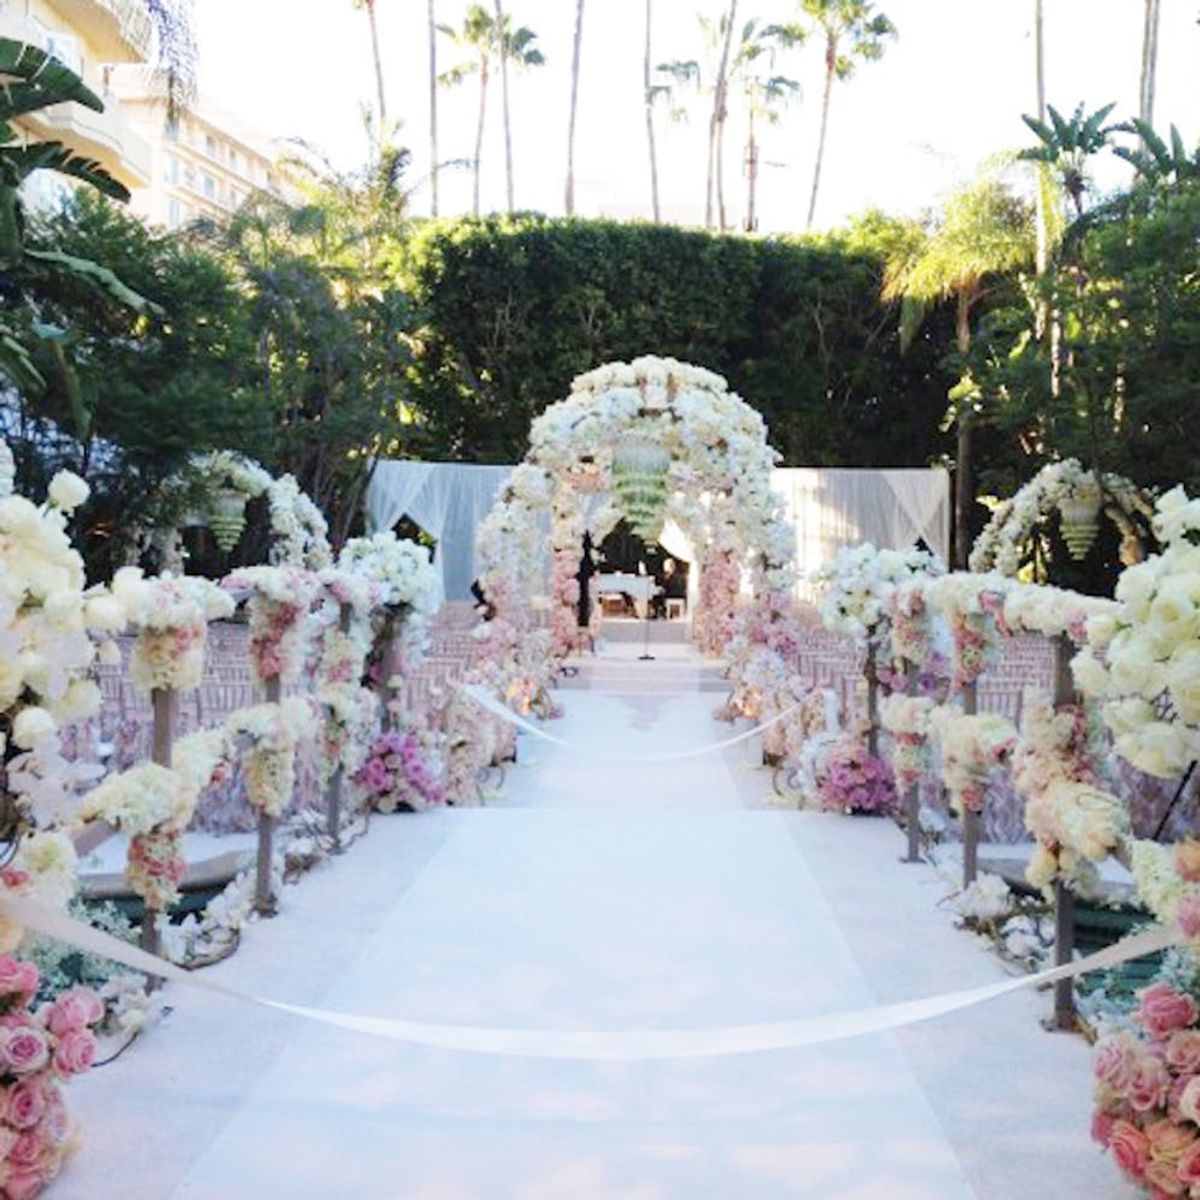 Jessica Simpson’s Wedding Florist Shares Decor + Budget Tips for Your Big Day